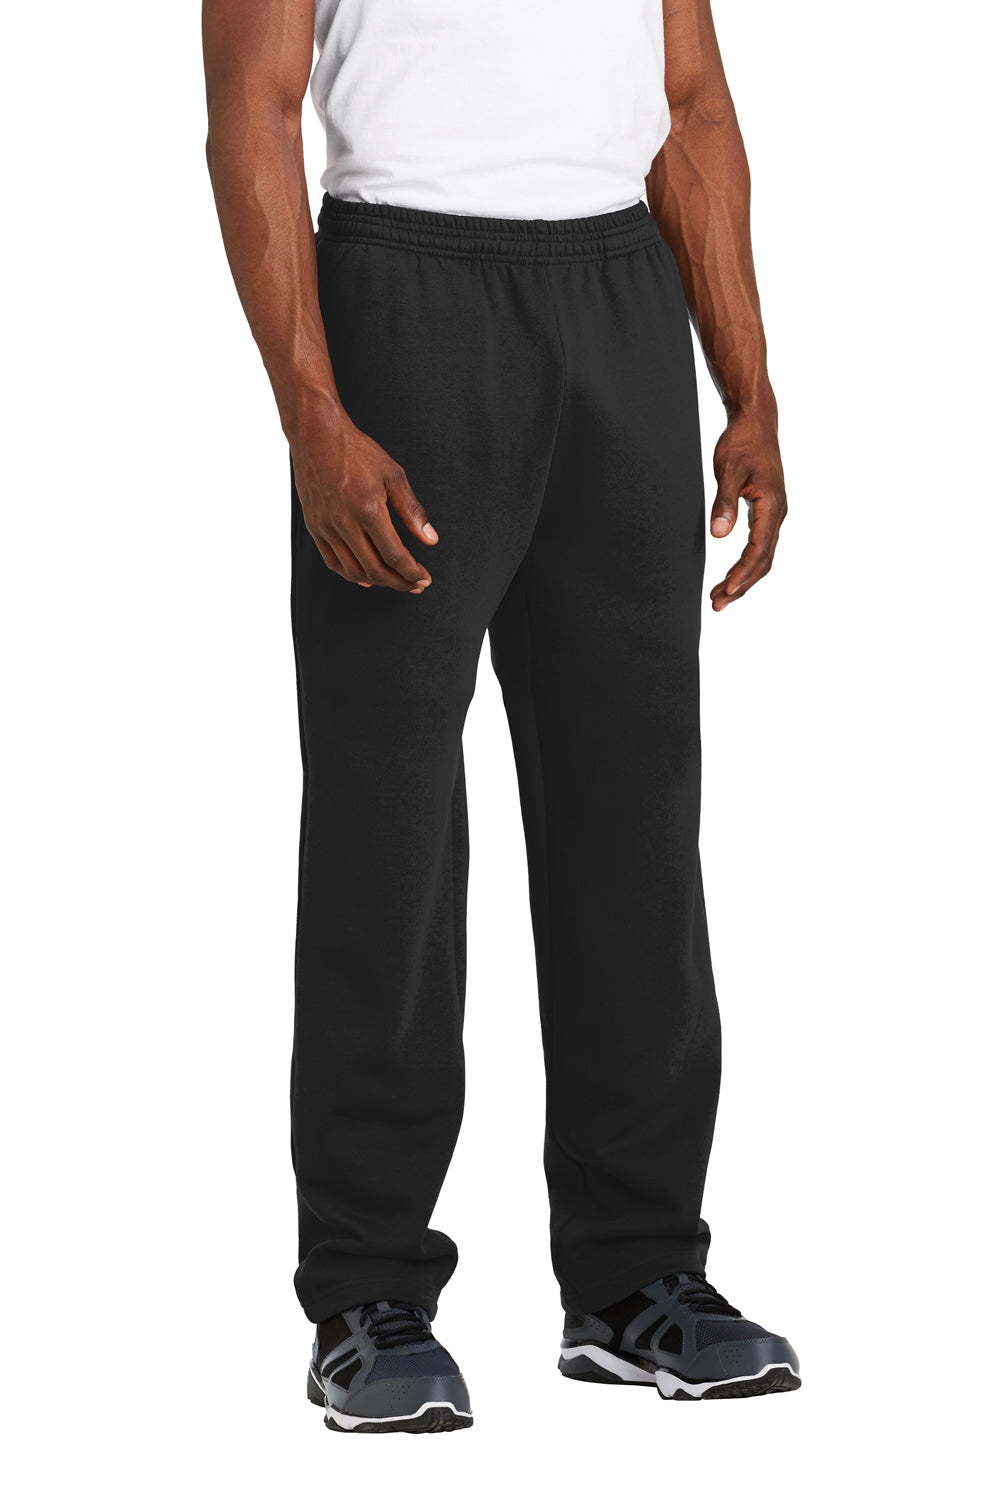 Sport-Tek ST257 Open Bottom Sweatpants w/ Pockets Black 3Q